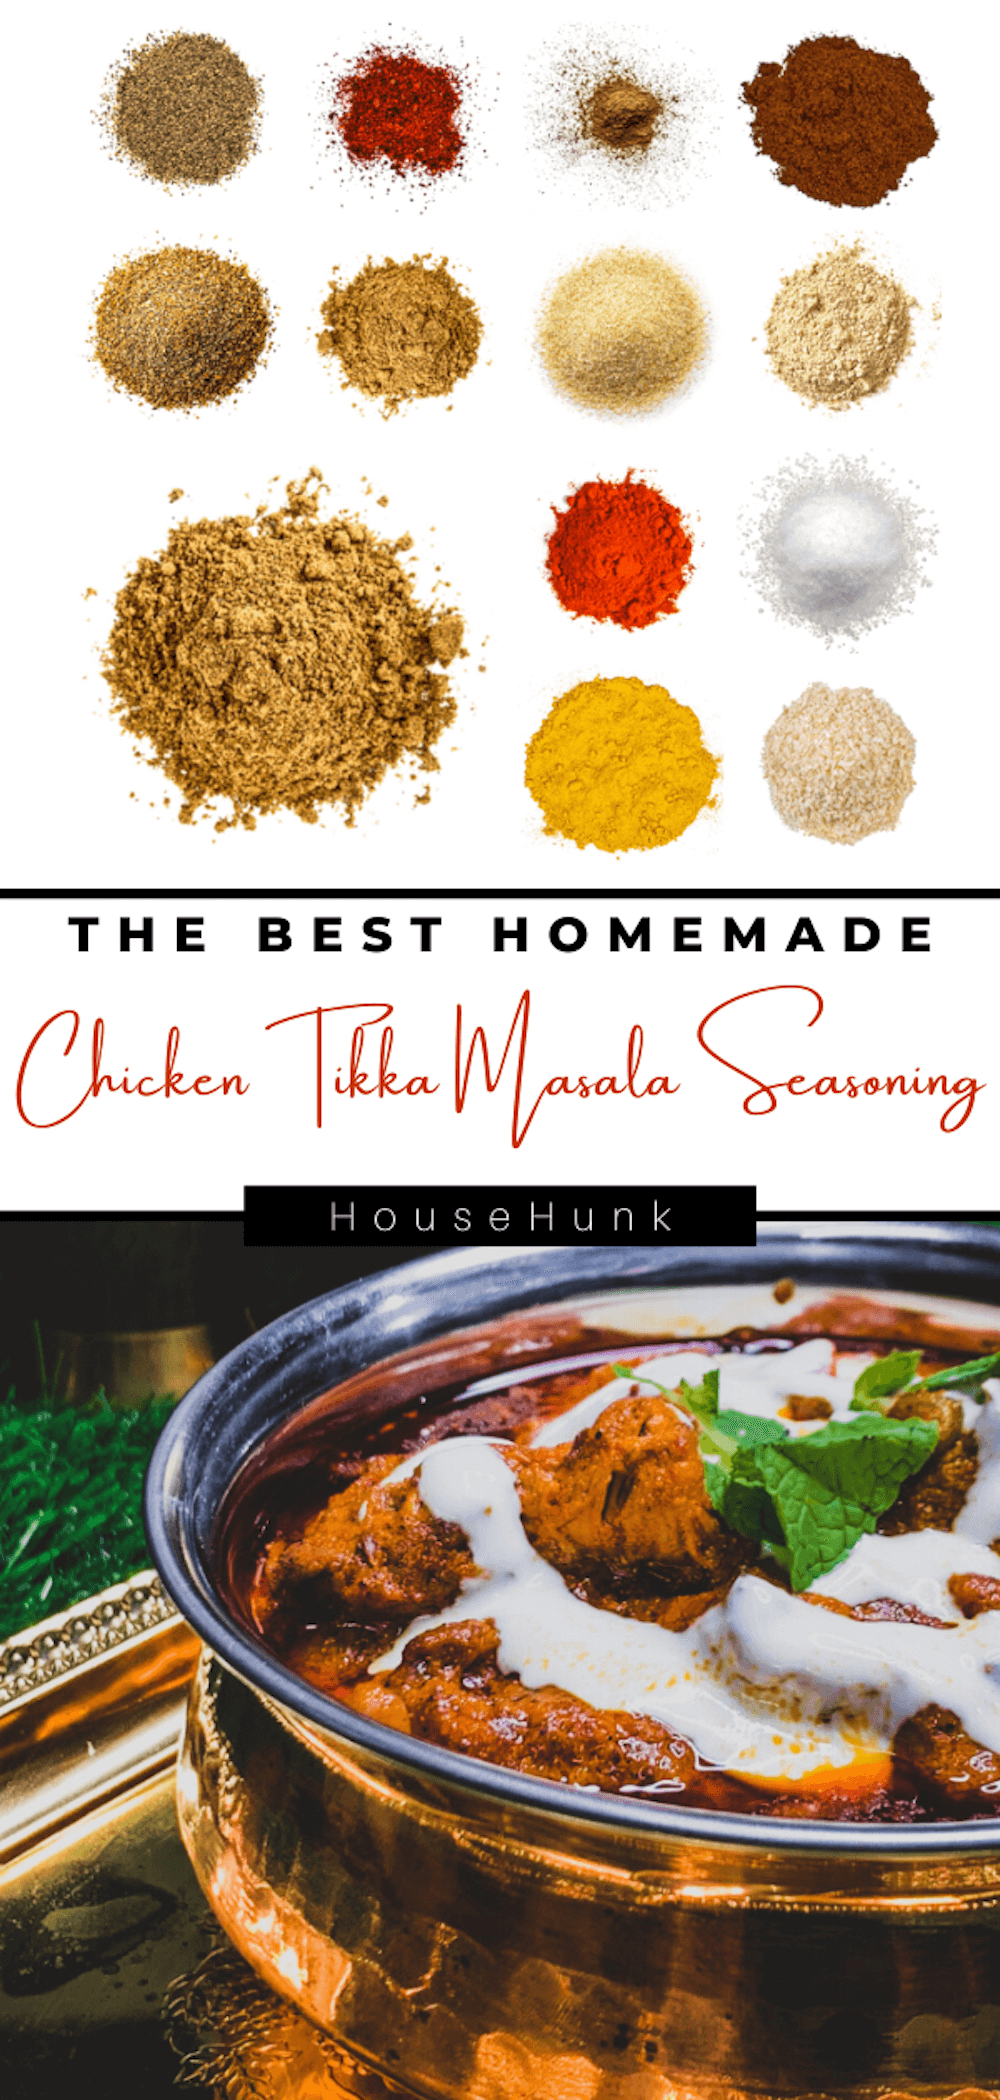 Homemade Chicken Tikka Masala Seasoning - House Hunk